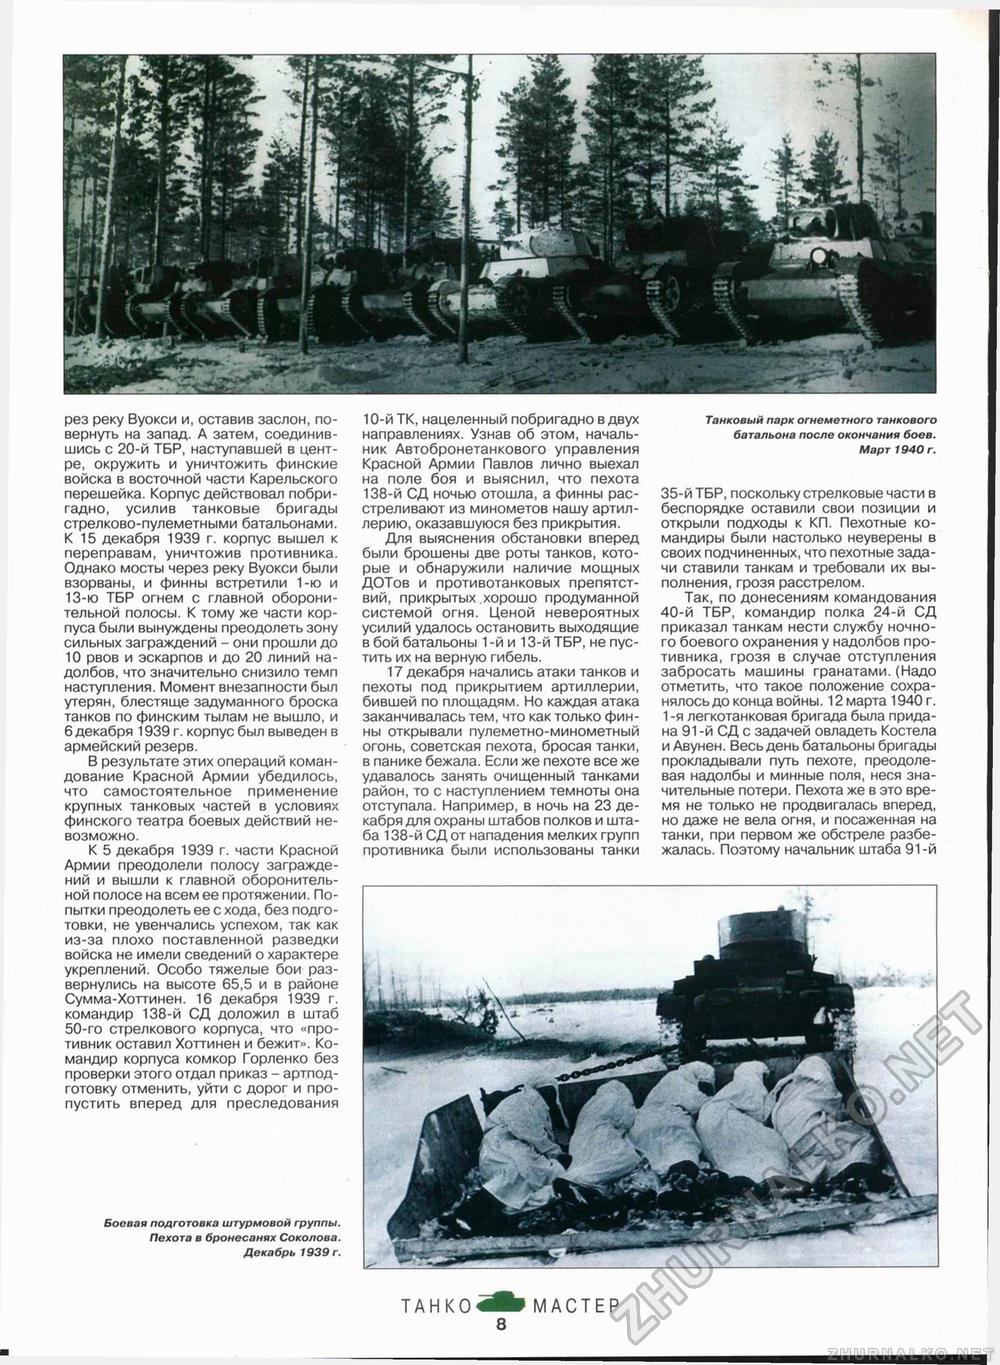 Танкомастер 1997-02, страница 10